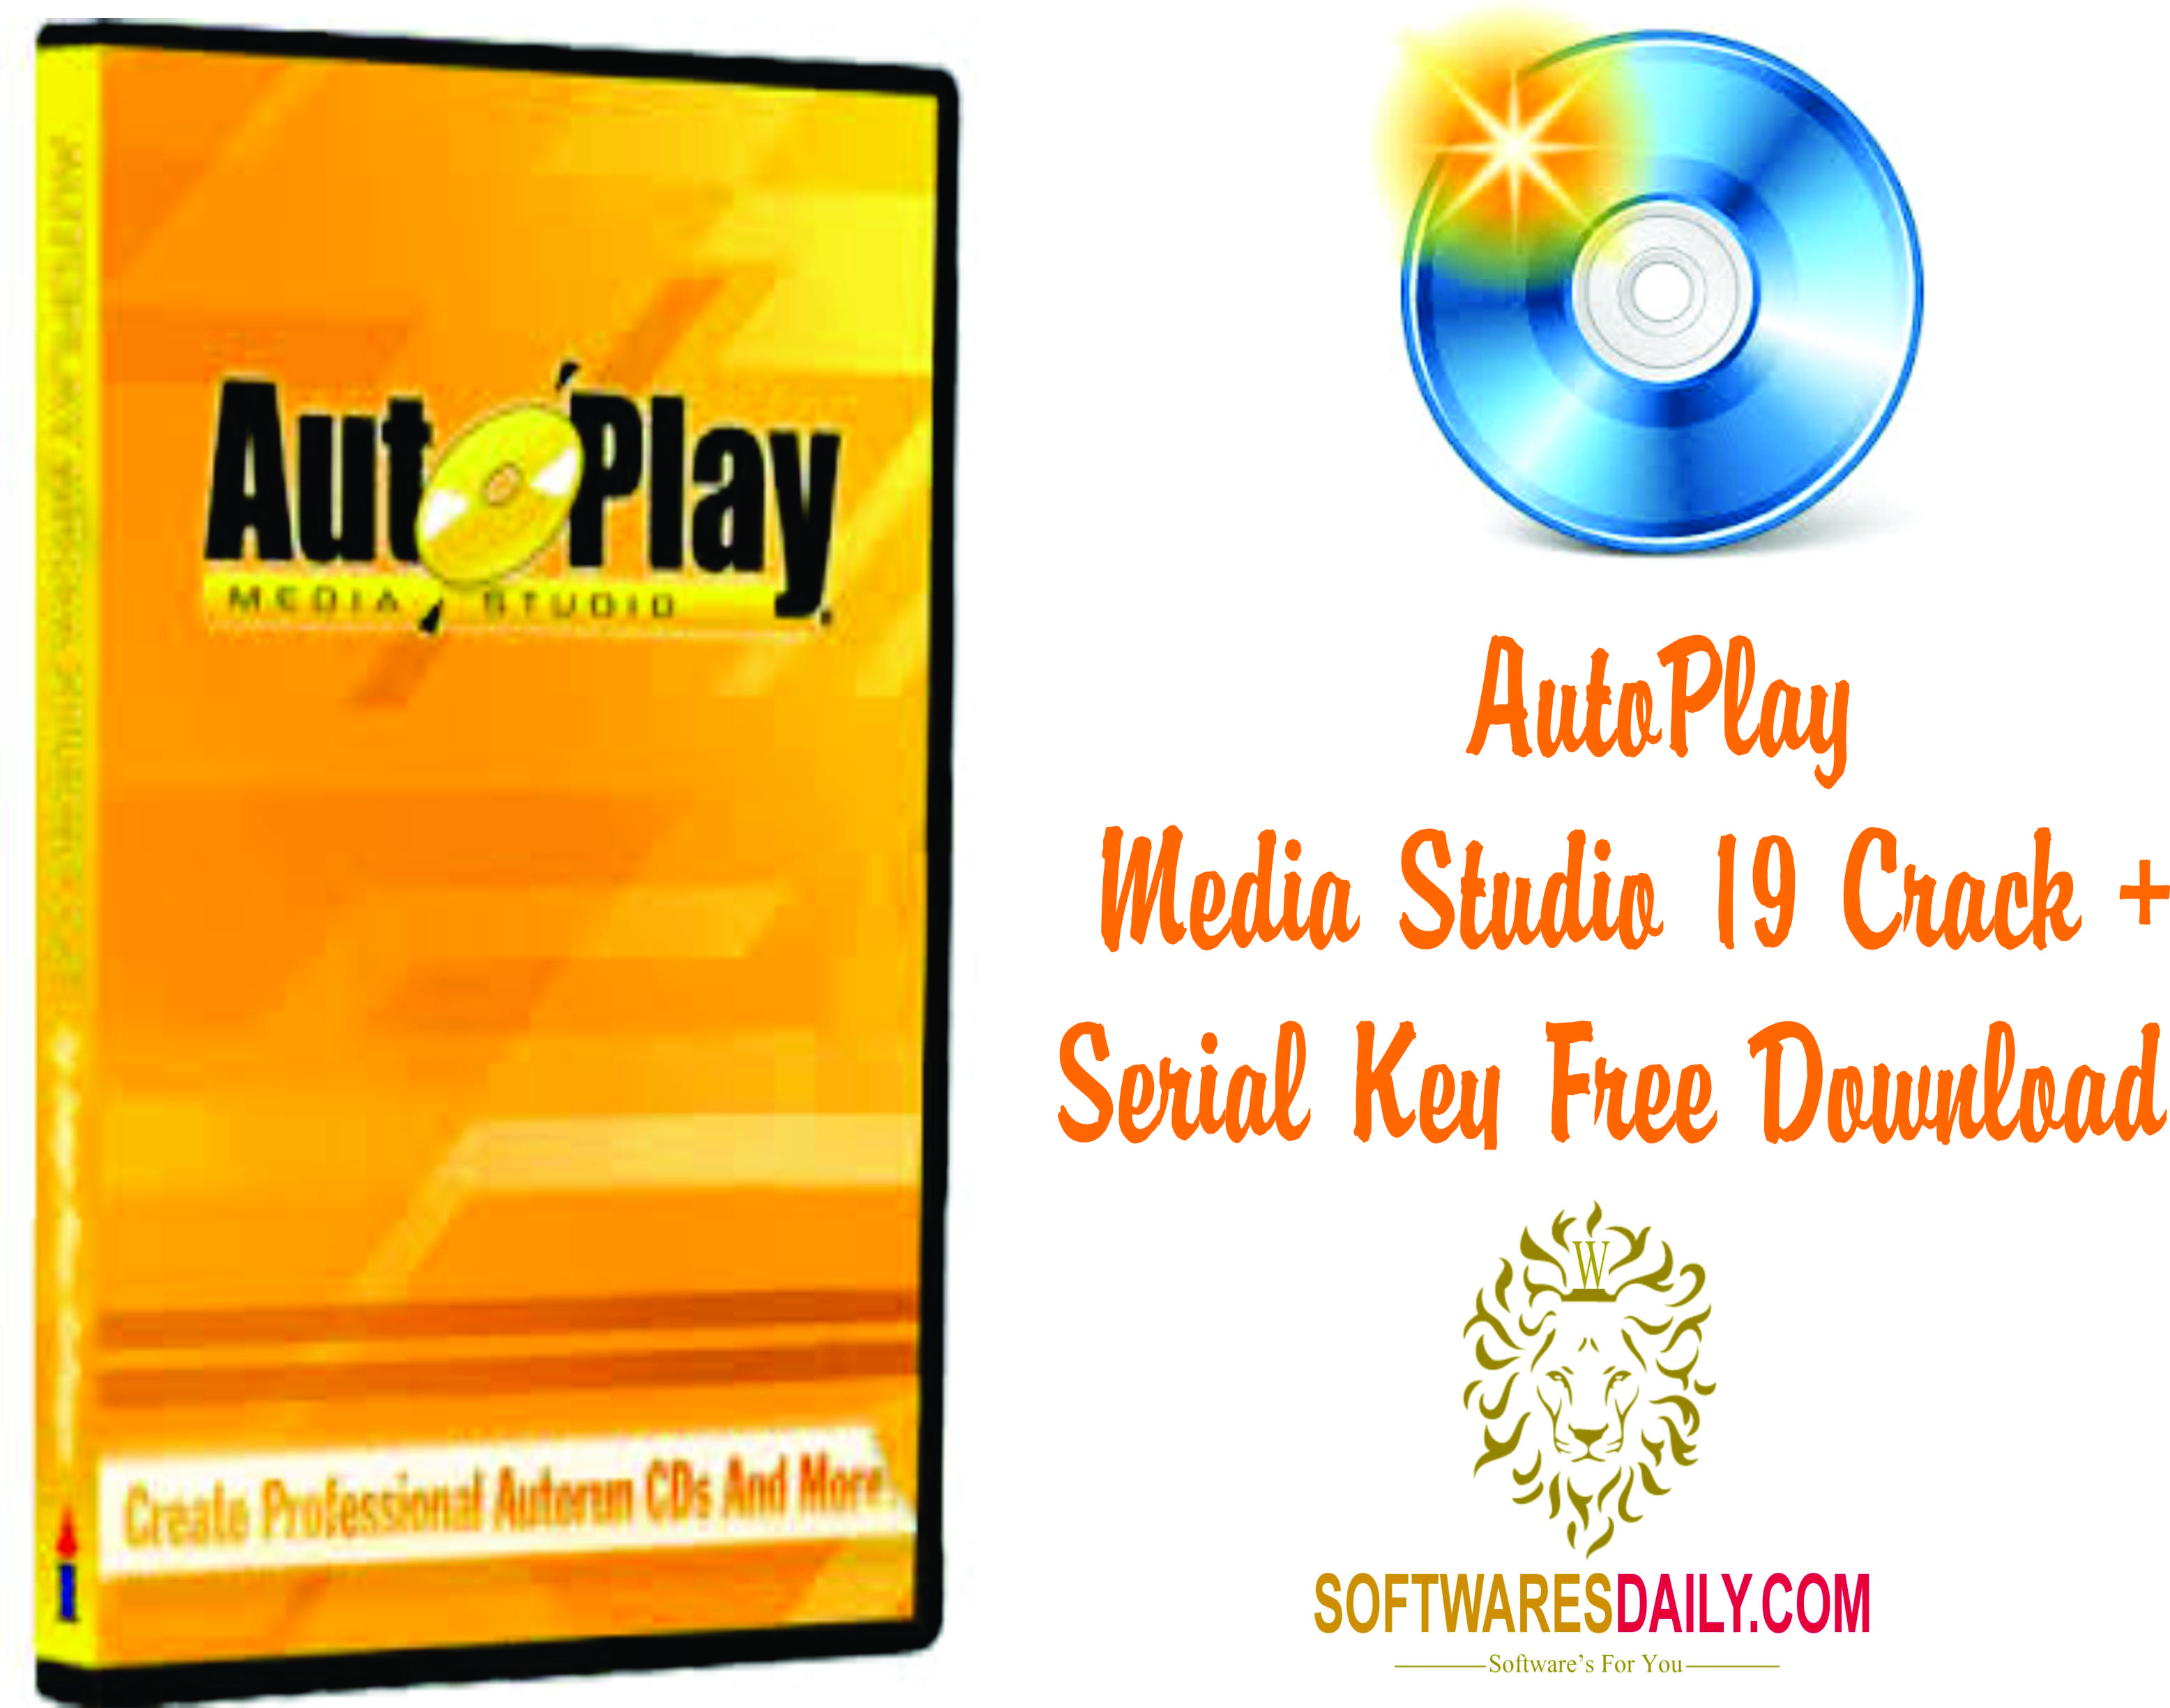 autoplay media studio free download